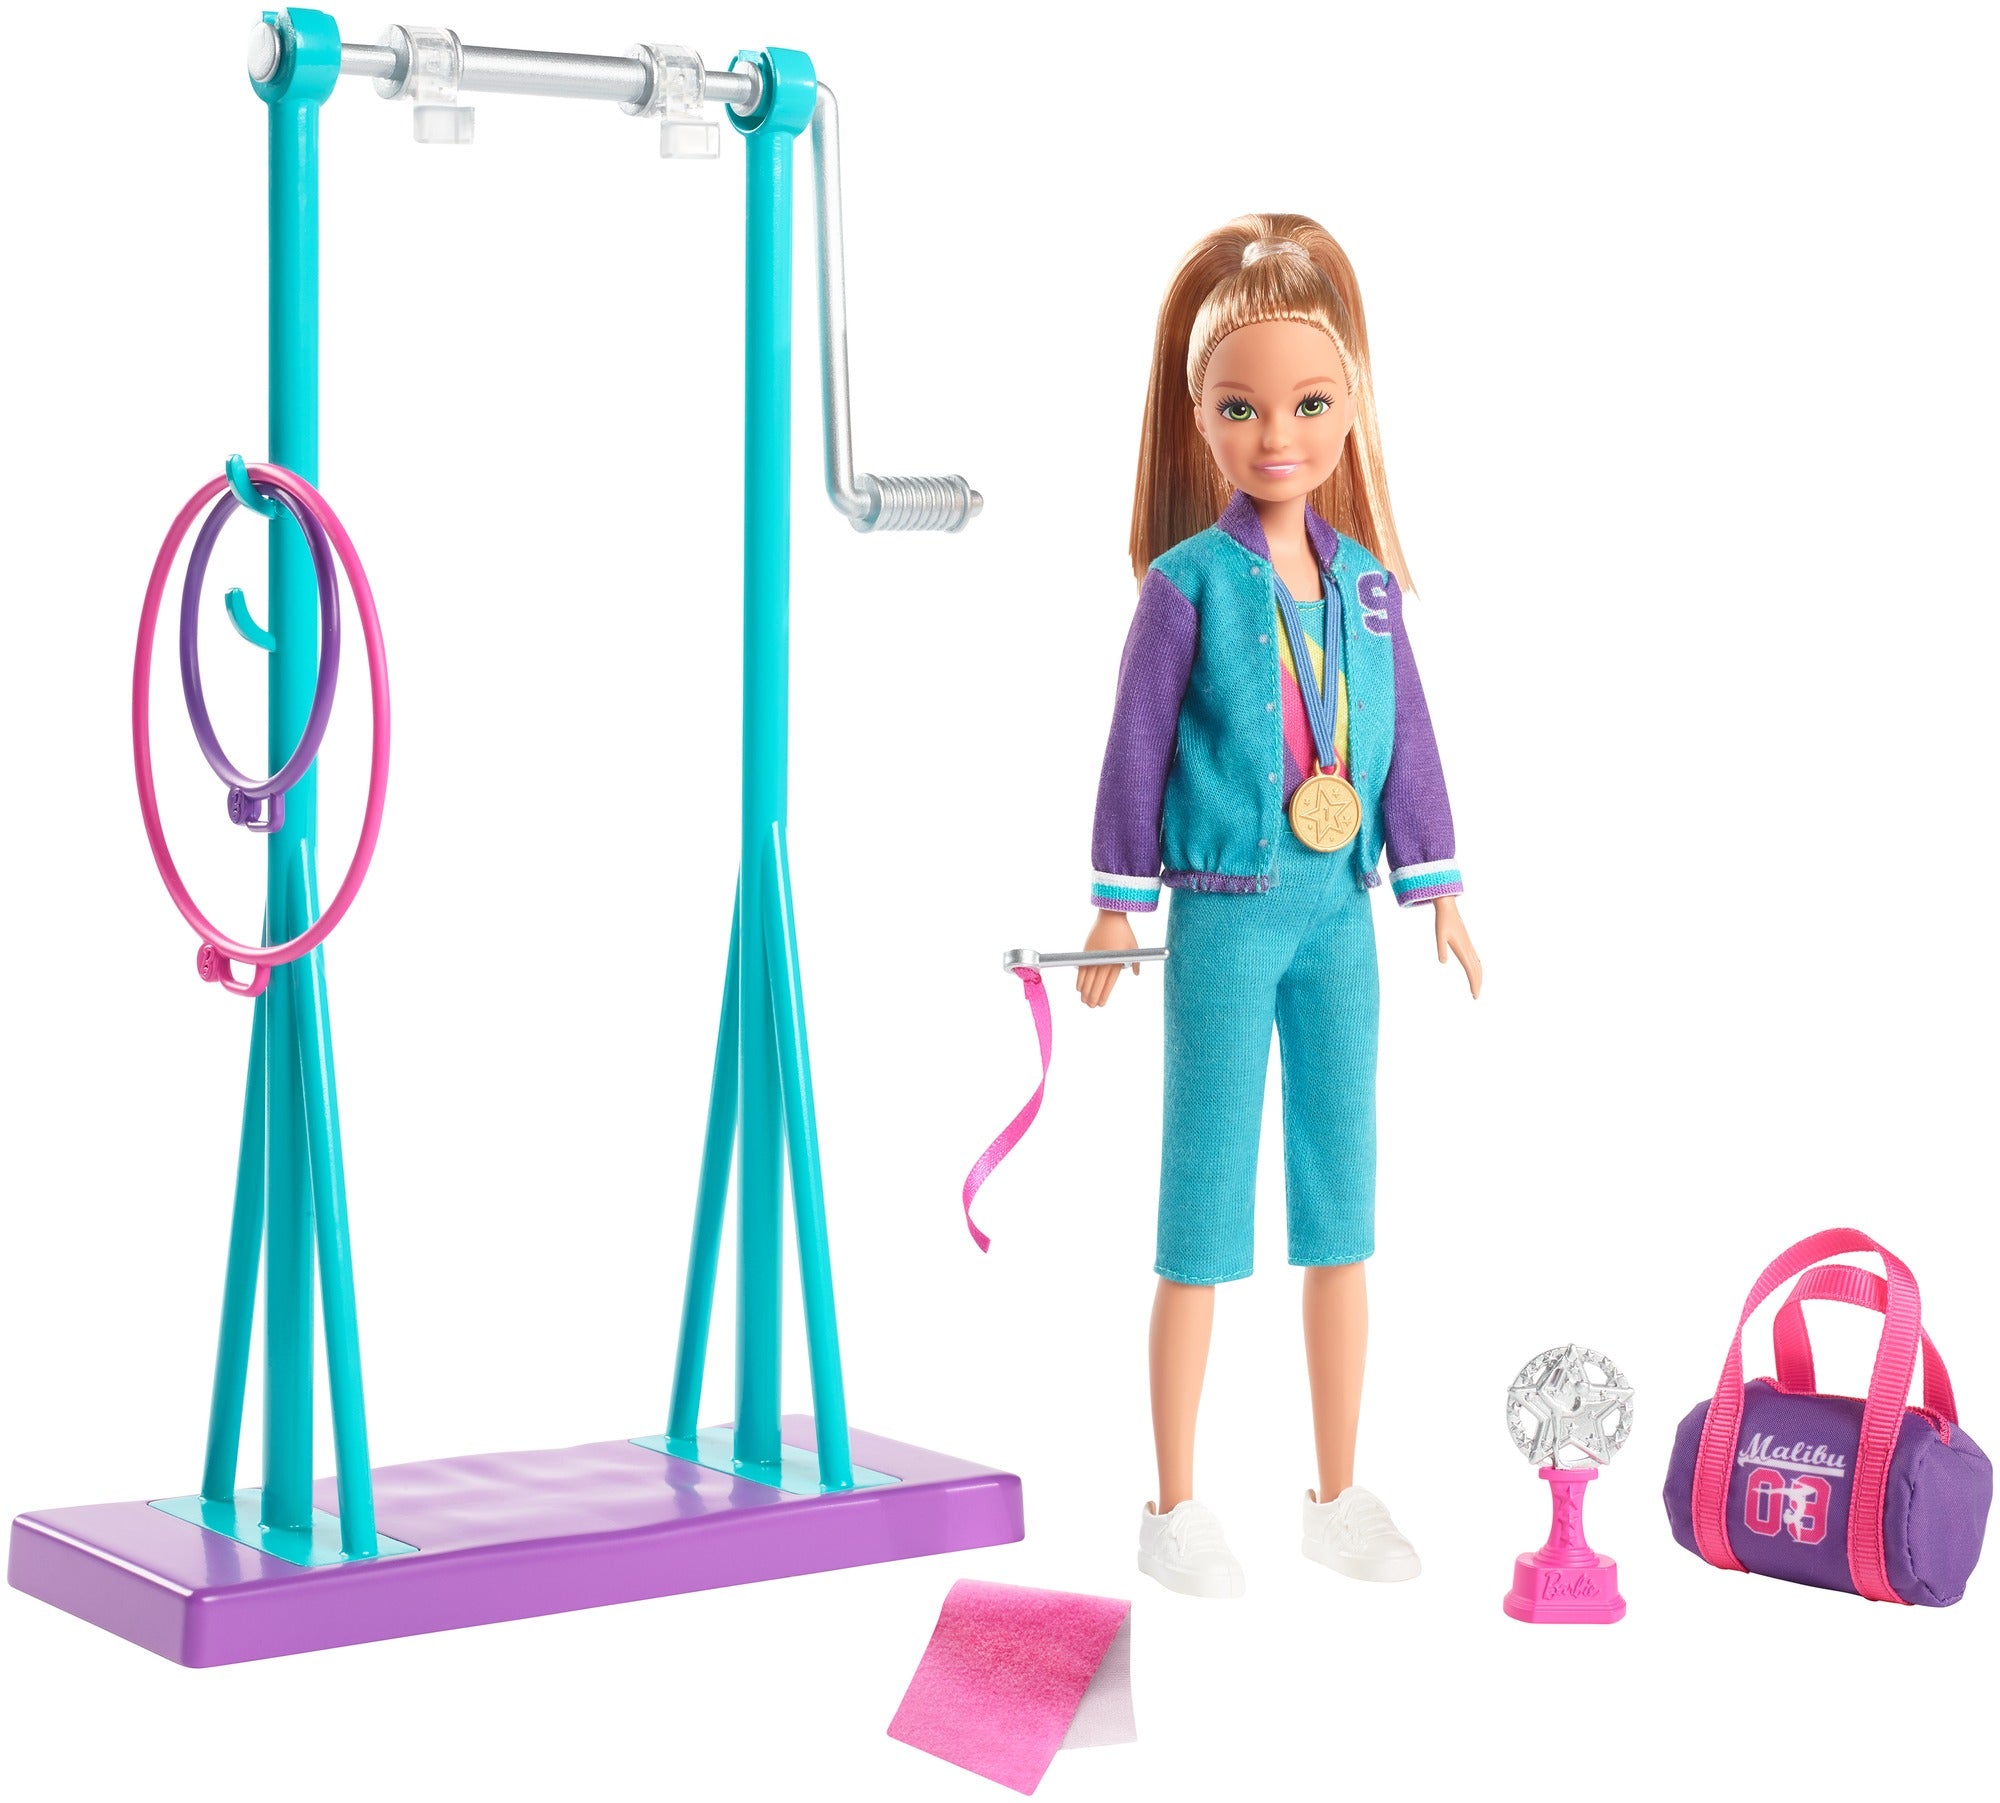 Barbie Careers Fashion, Pink Gymnastics Leotard with Accessories